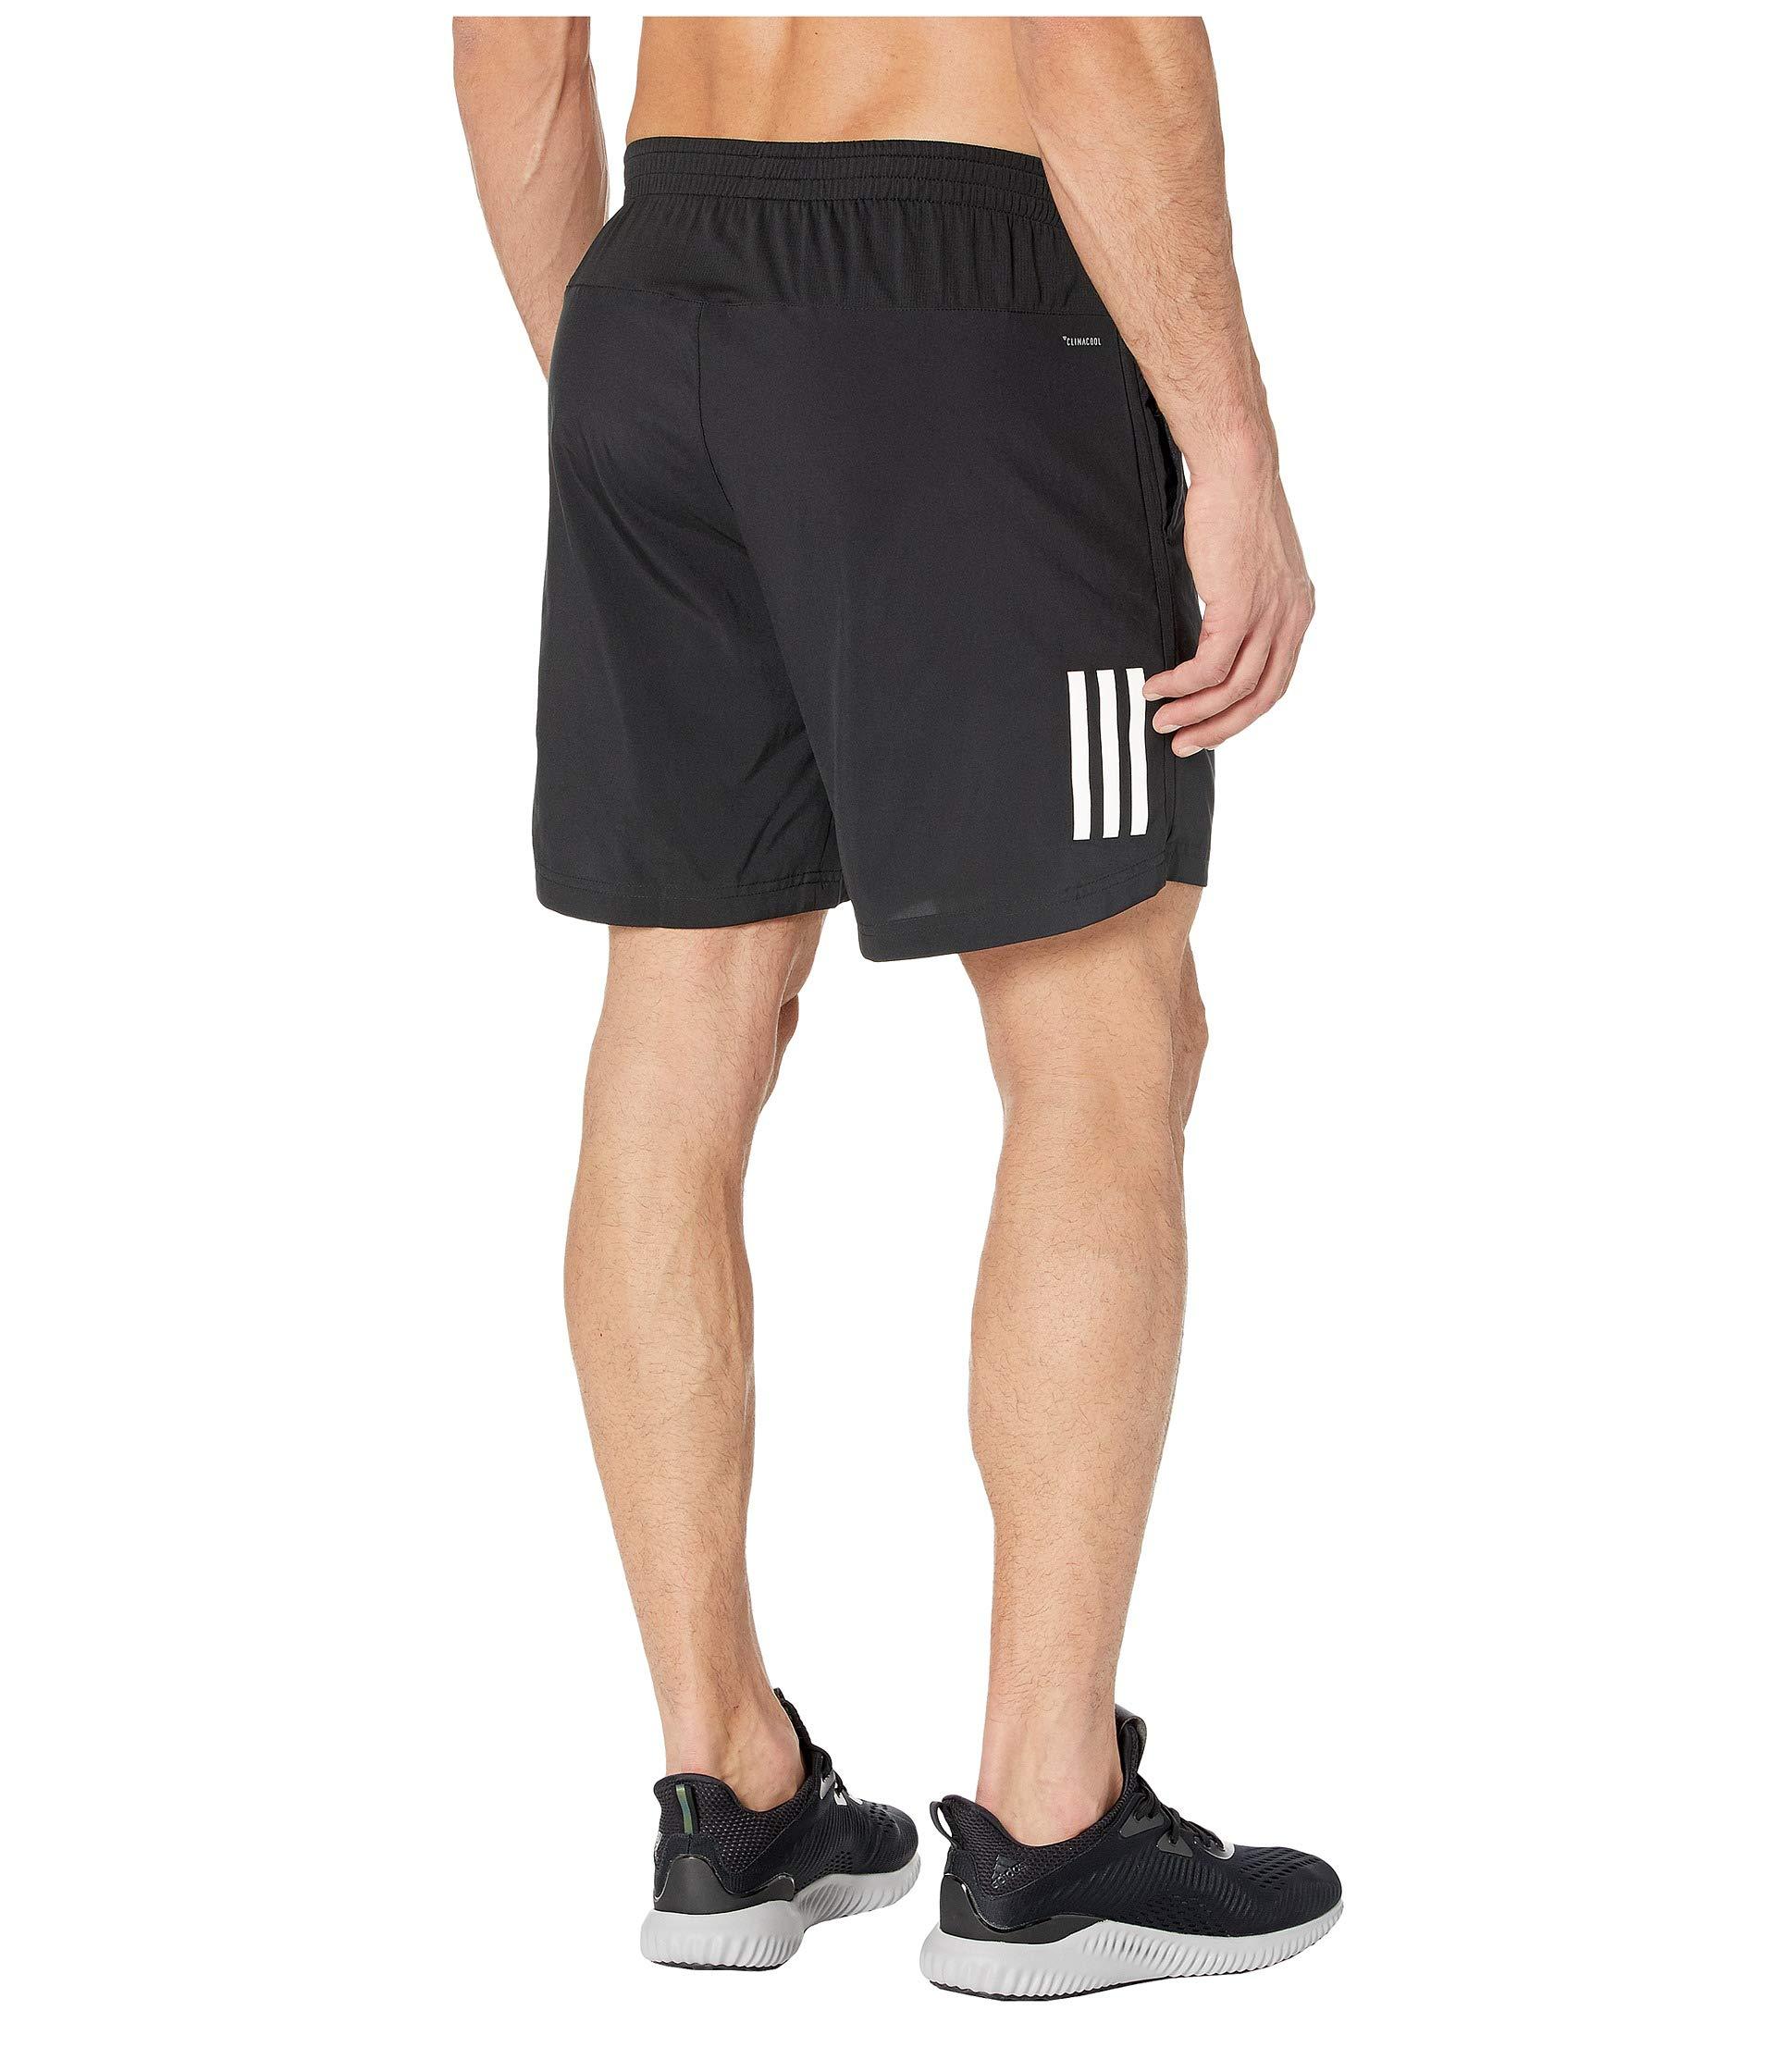 adidas Response 7 Shorts in Black for Men - Lyst